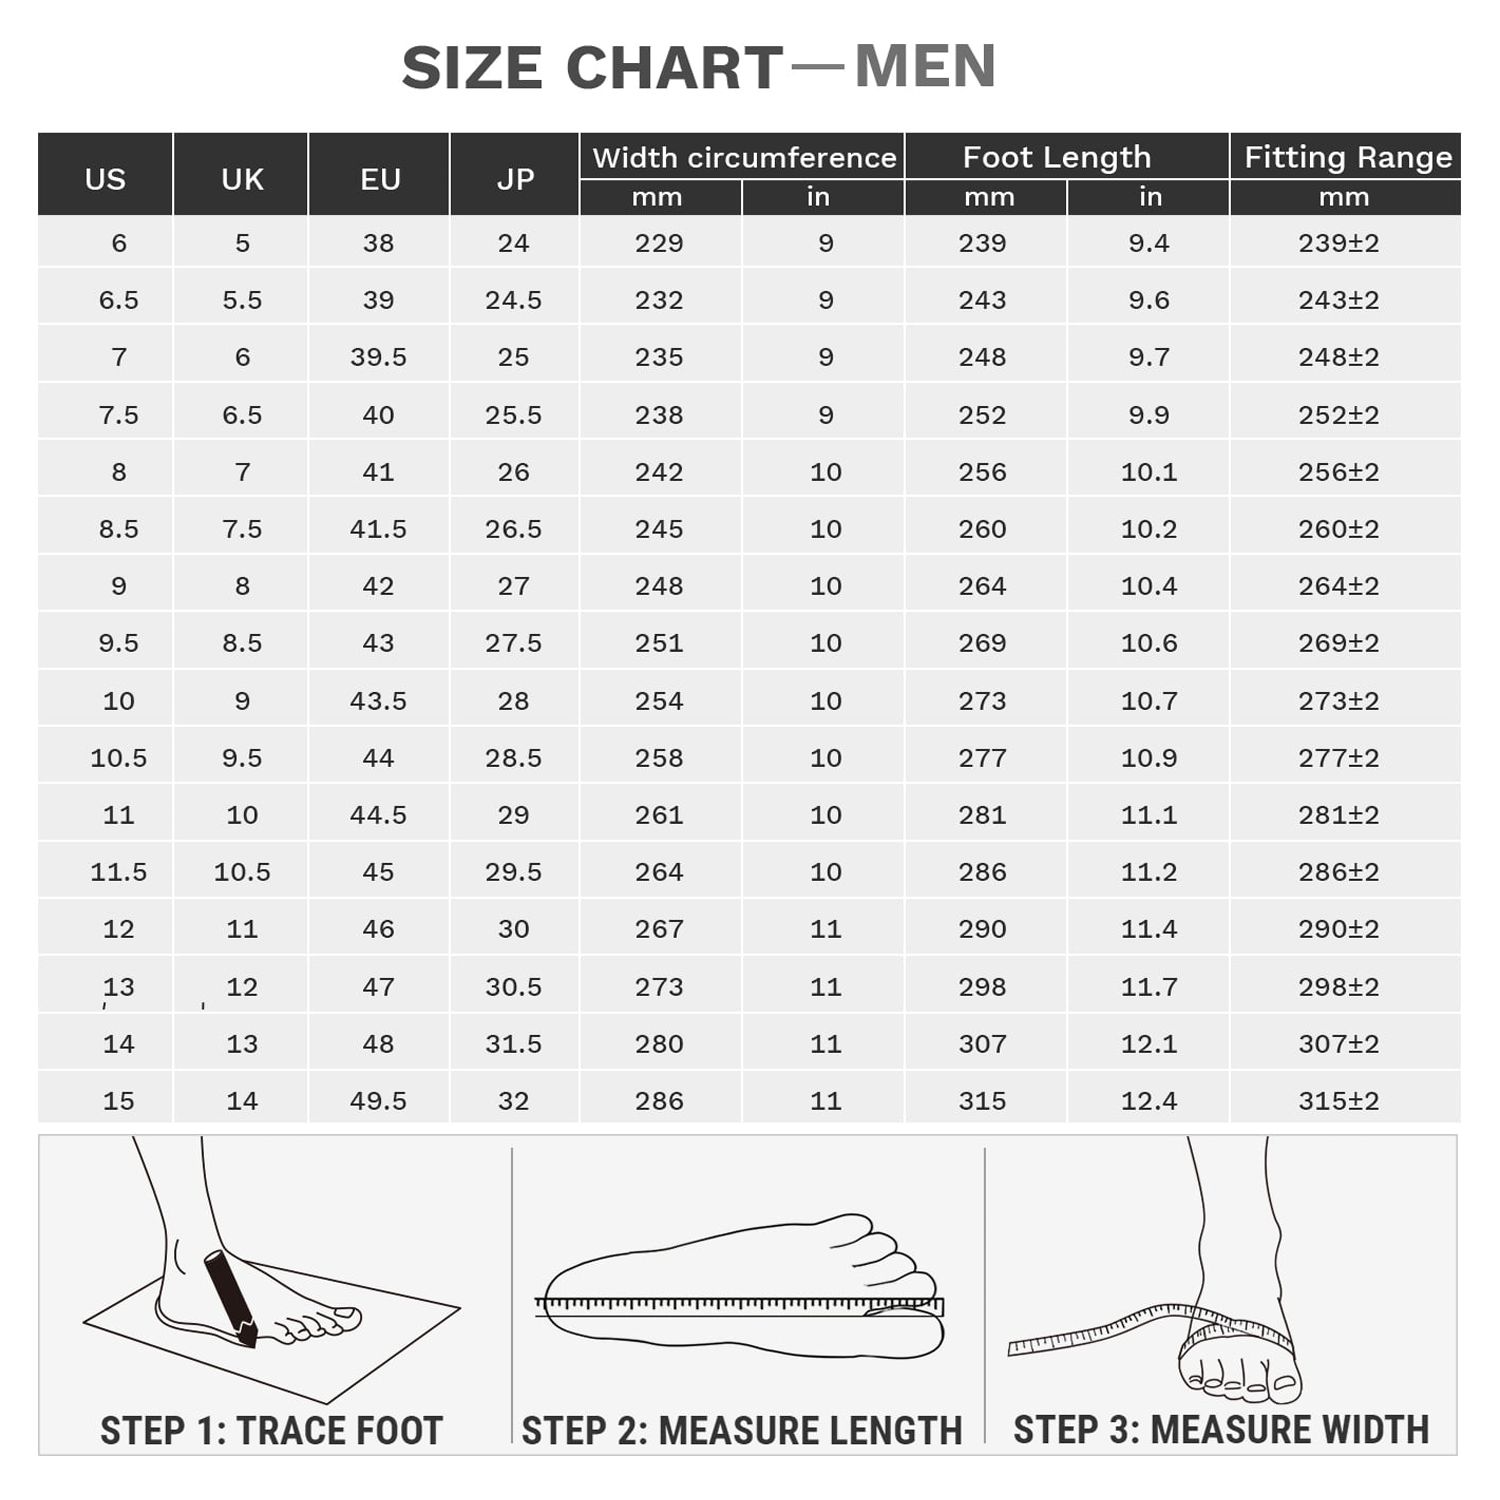 Nortiv8 Men's Memory Foam Adjustable Slide Sandals Comfort Lightweight Summer Beach Sandals Shoes FUSION GREY Size 12 - image 5 of 5